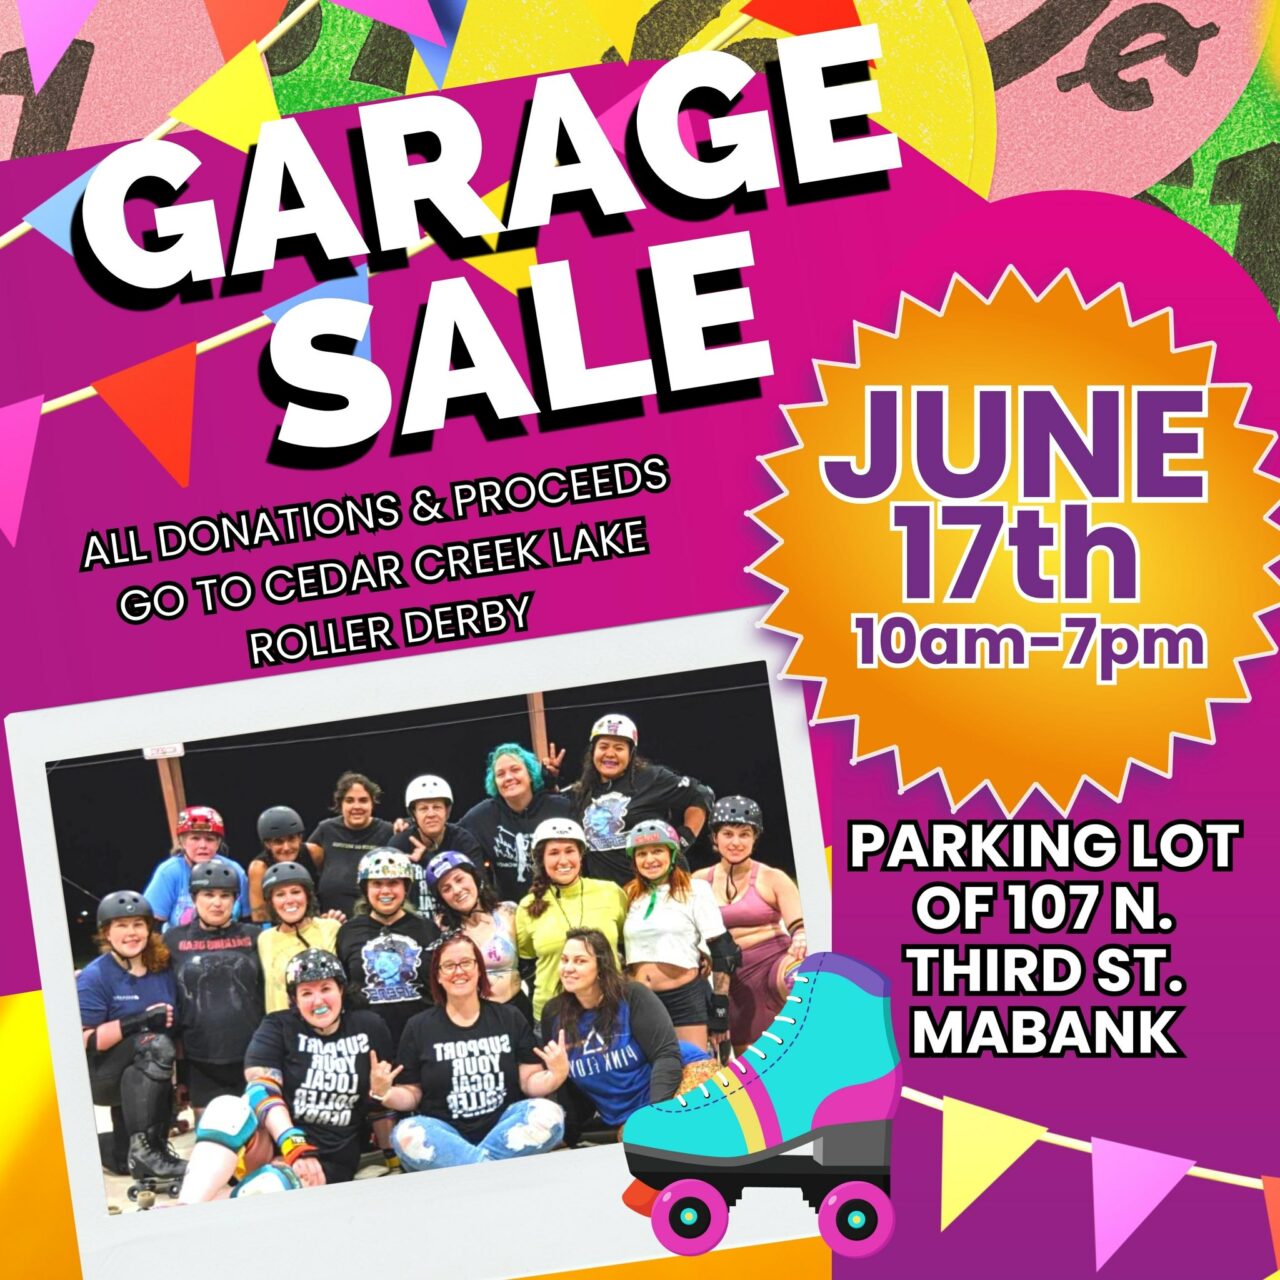 Garage Sale Fundraiser - Cedar Creek Lake Roller Derby - Located in MABANK 2 garage sale fundraiser CedarCreekLake.Online